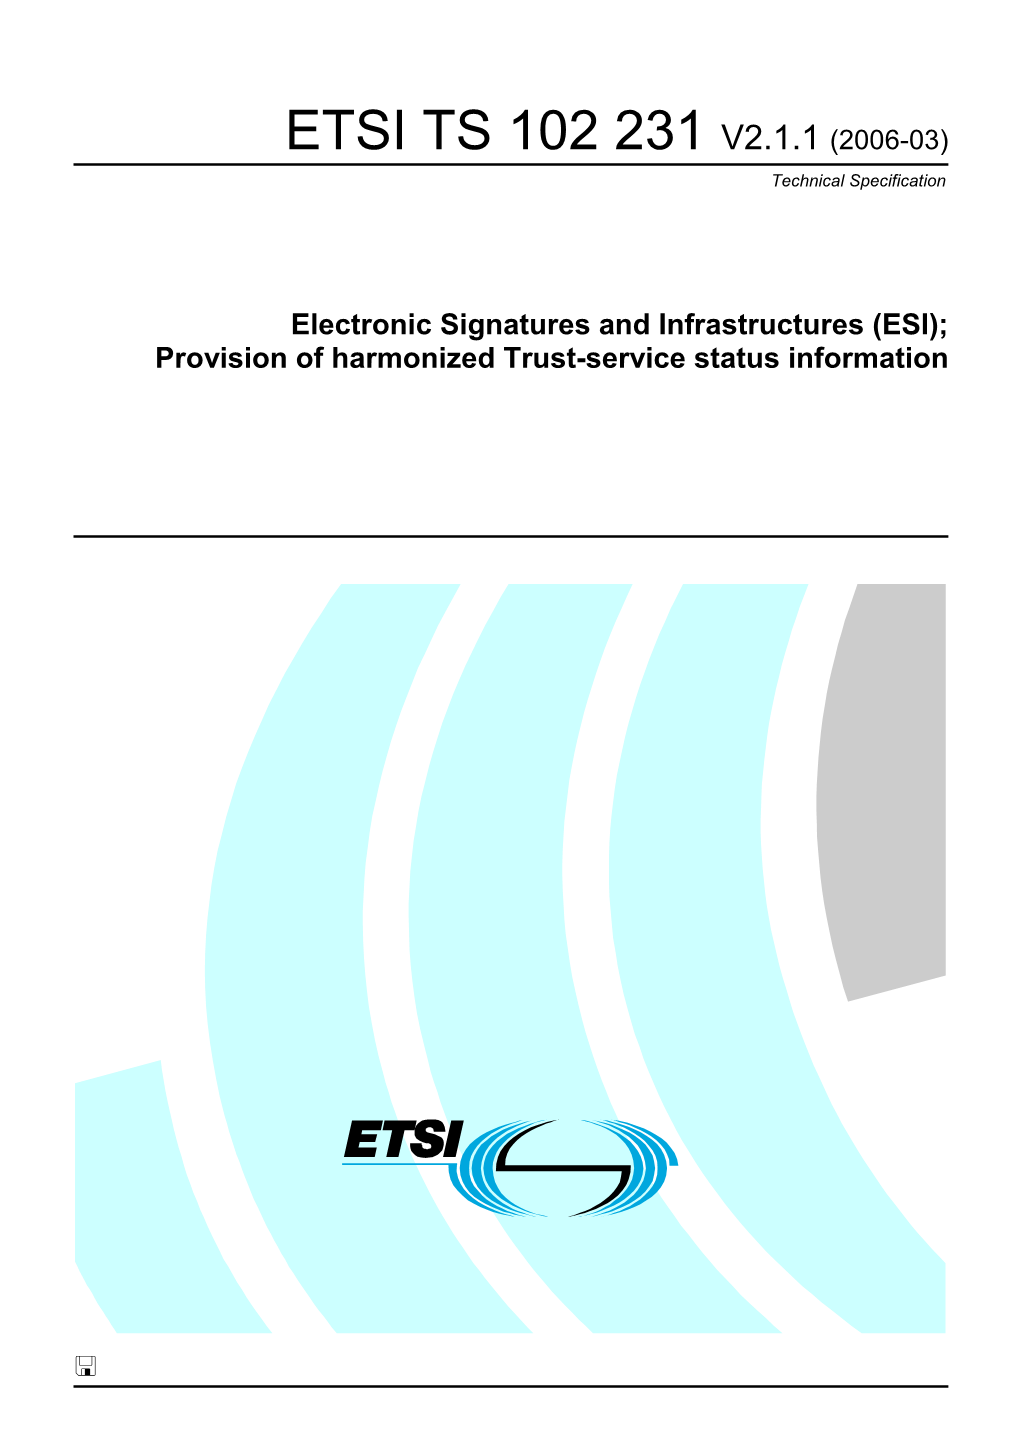 ETSI TS 102 231 V2.1.1 (2006-03) Technical Specification